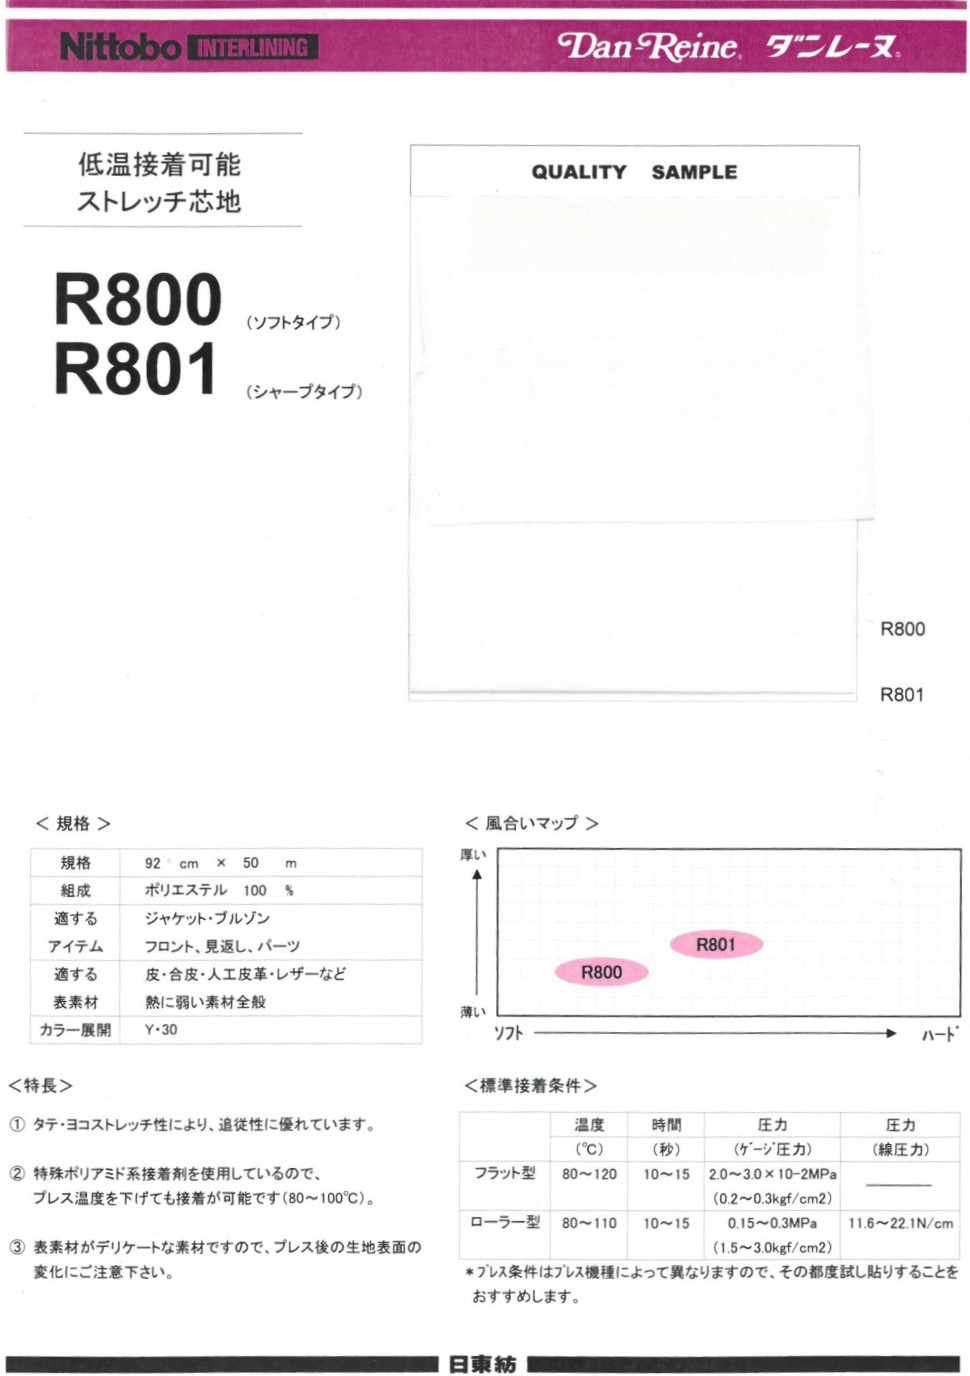 R801 Interfodera Adesiva Estensibile Danlaine Per Basse Temperature Sharp Tipo 30D Nittobo